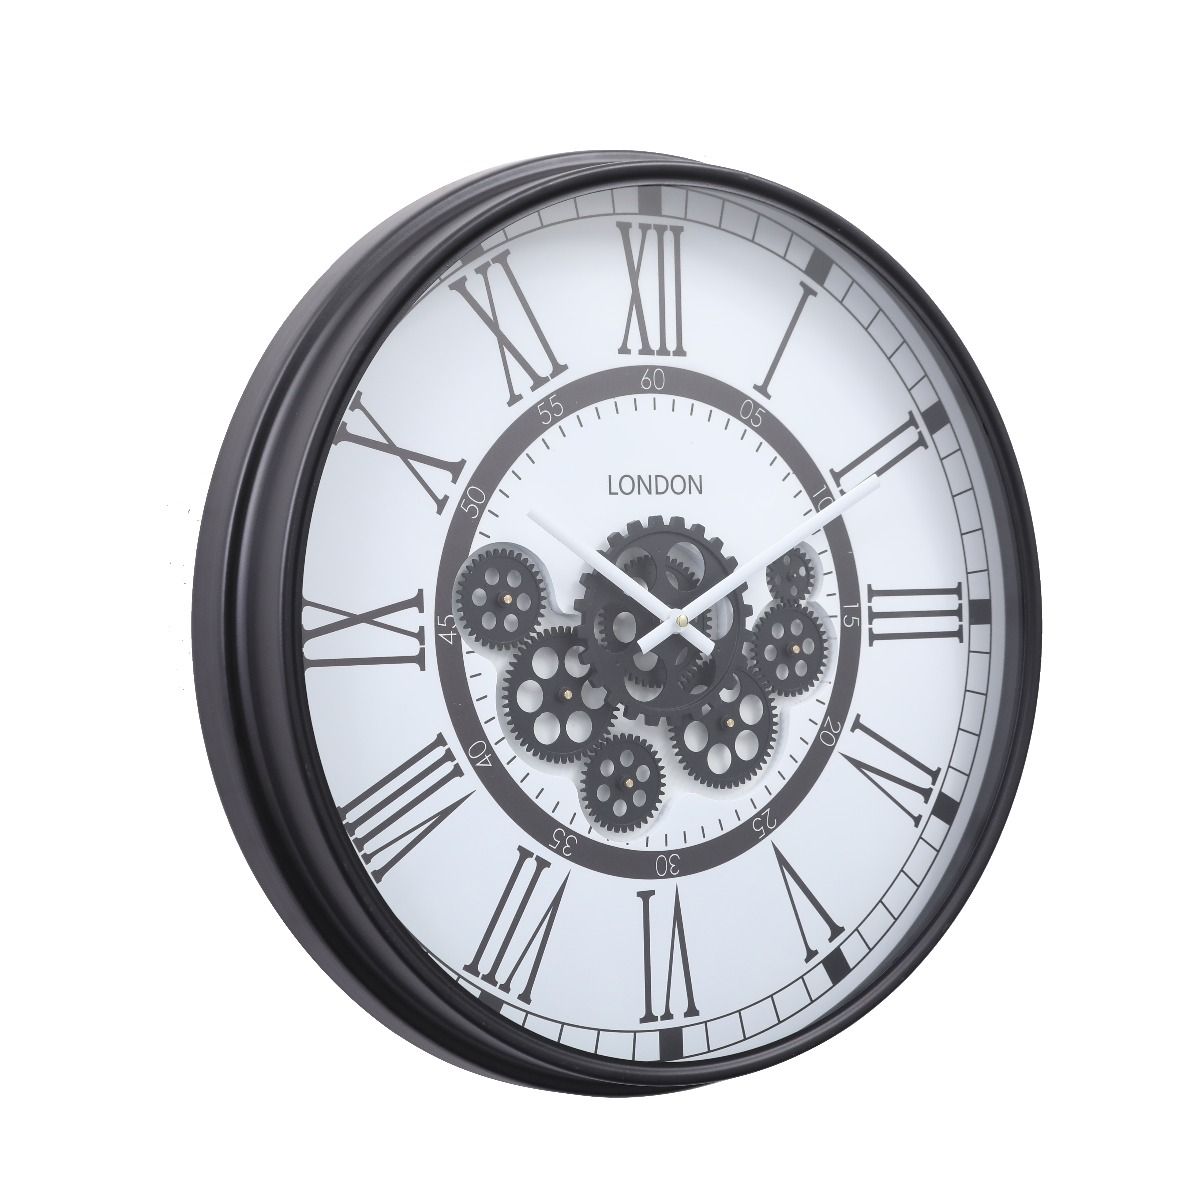 Industrial/vintage-inspired clock range - MODEL 011